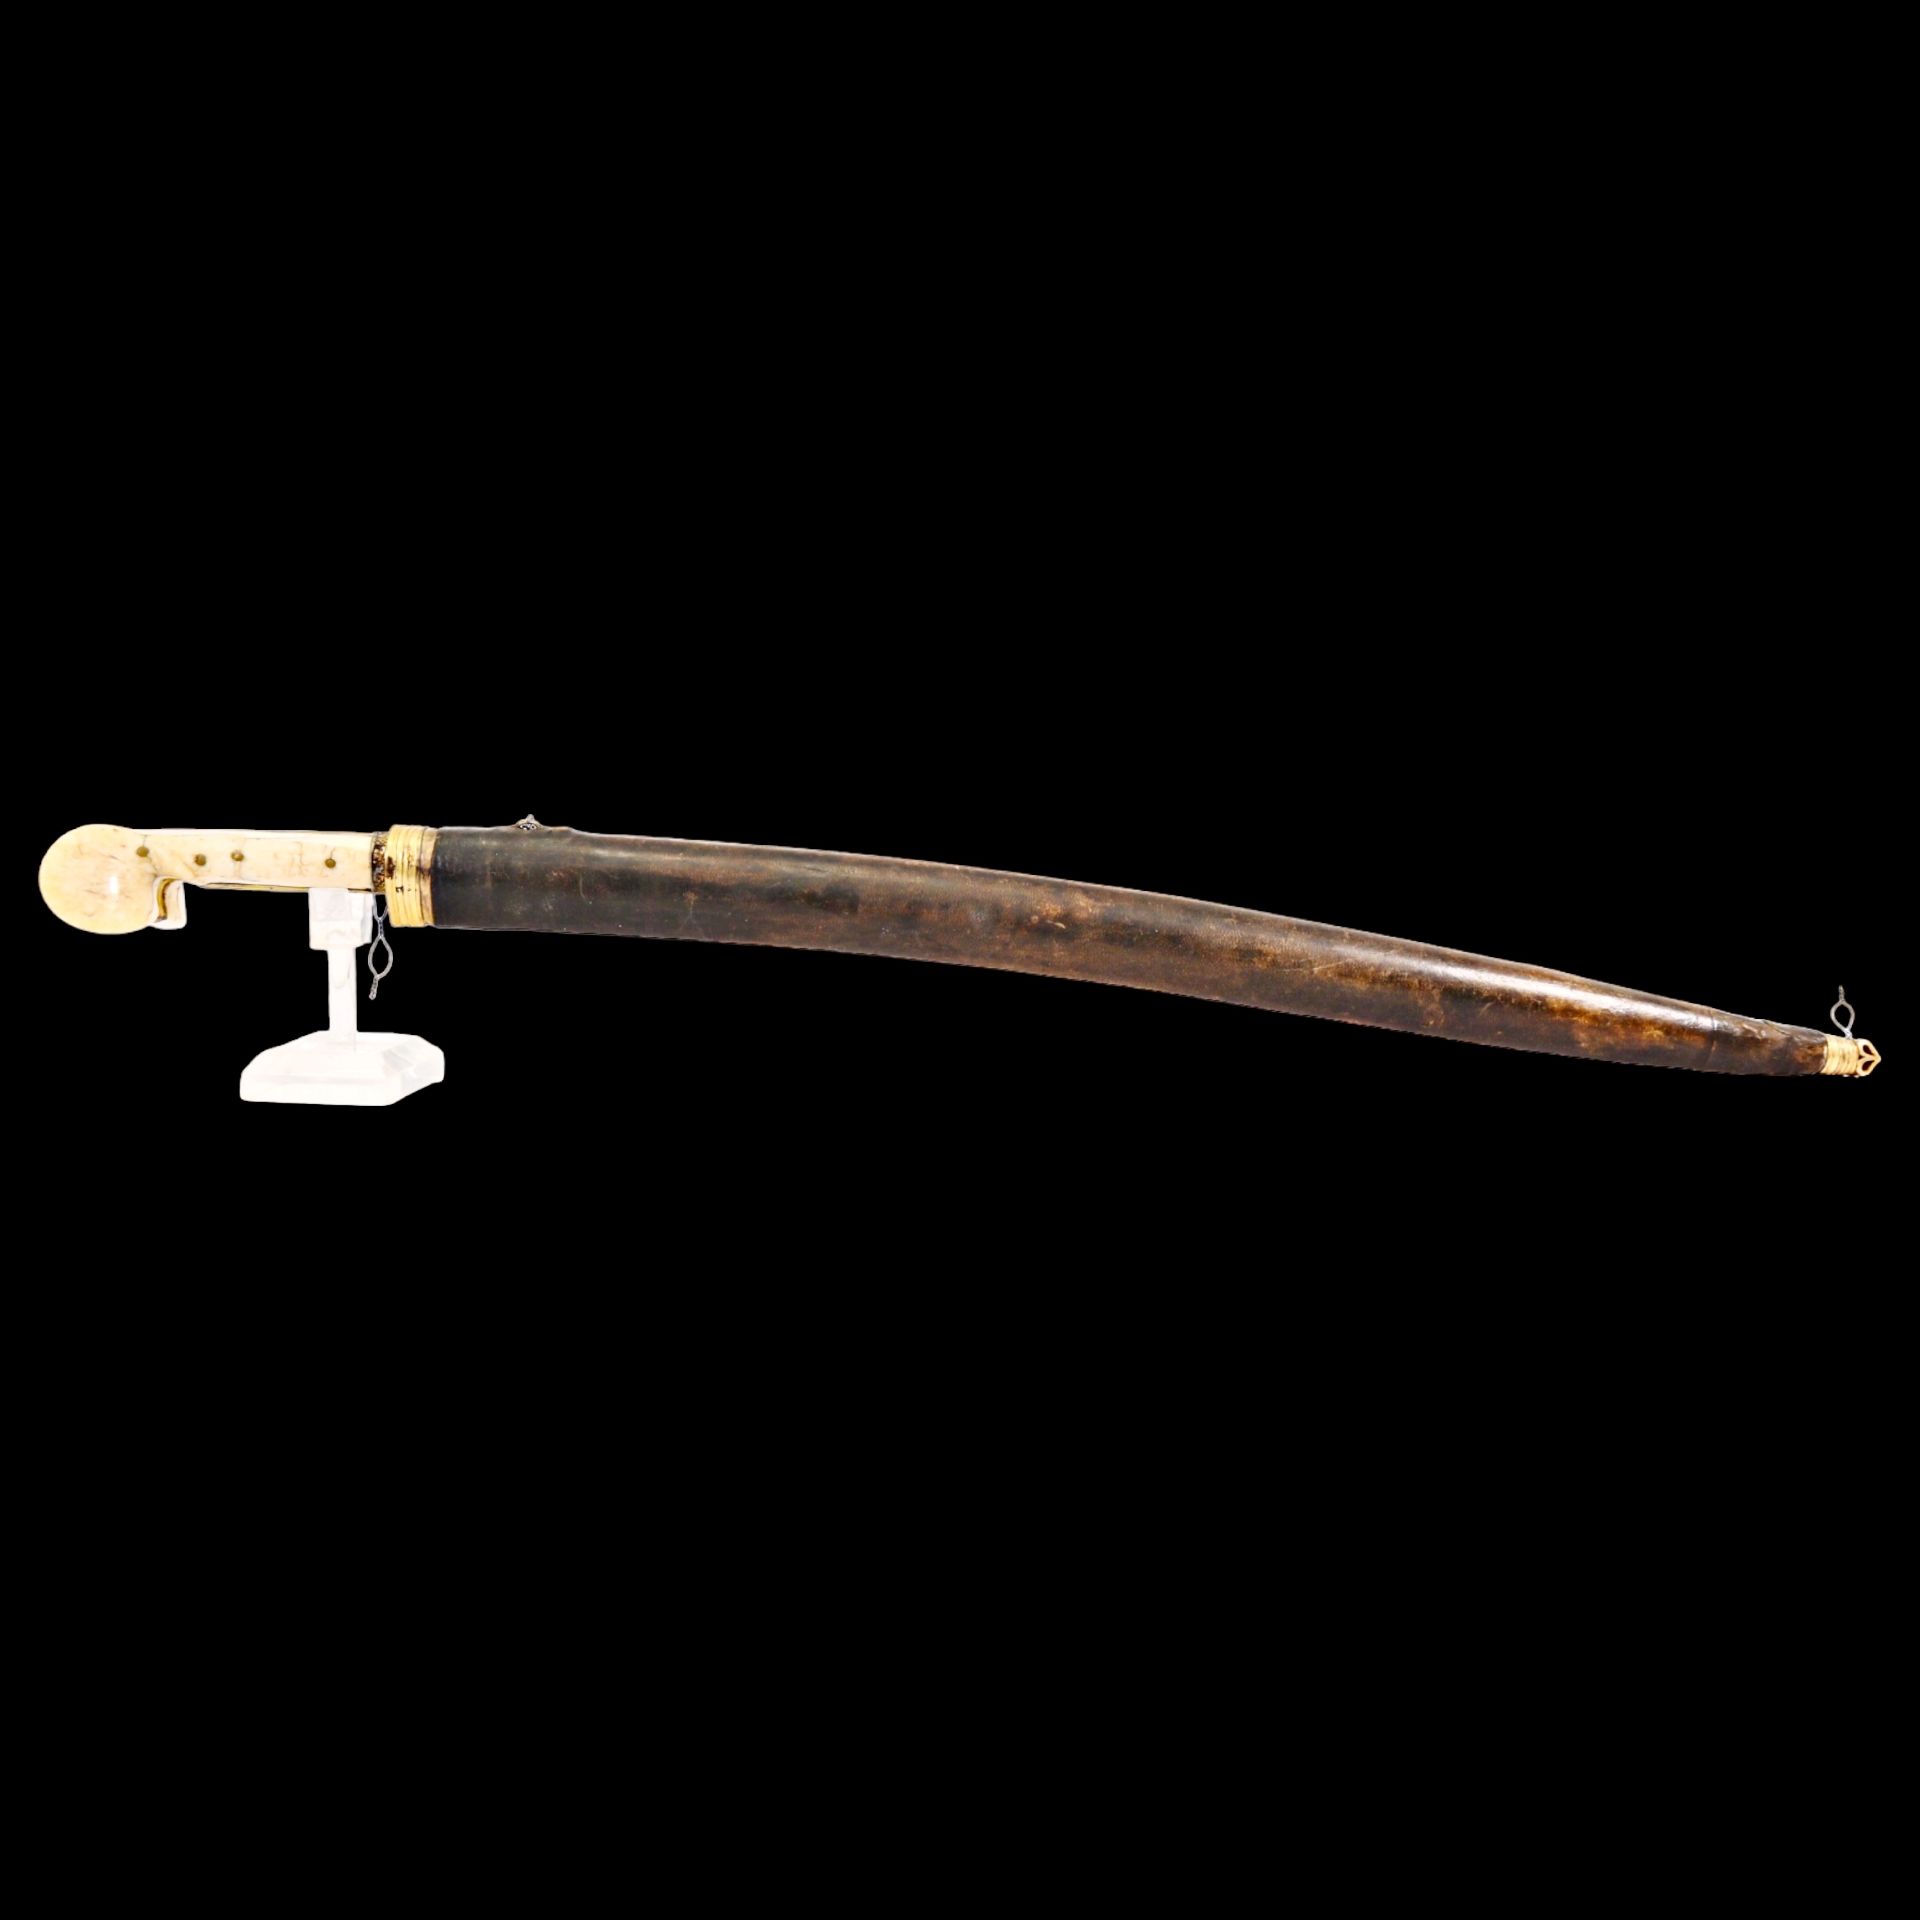 Magnificent Ottoman yatagan sword with bone hilt and gold kofgari on the blade, 1823. - Image 2 of 32